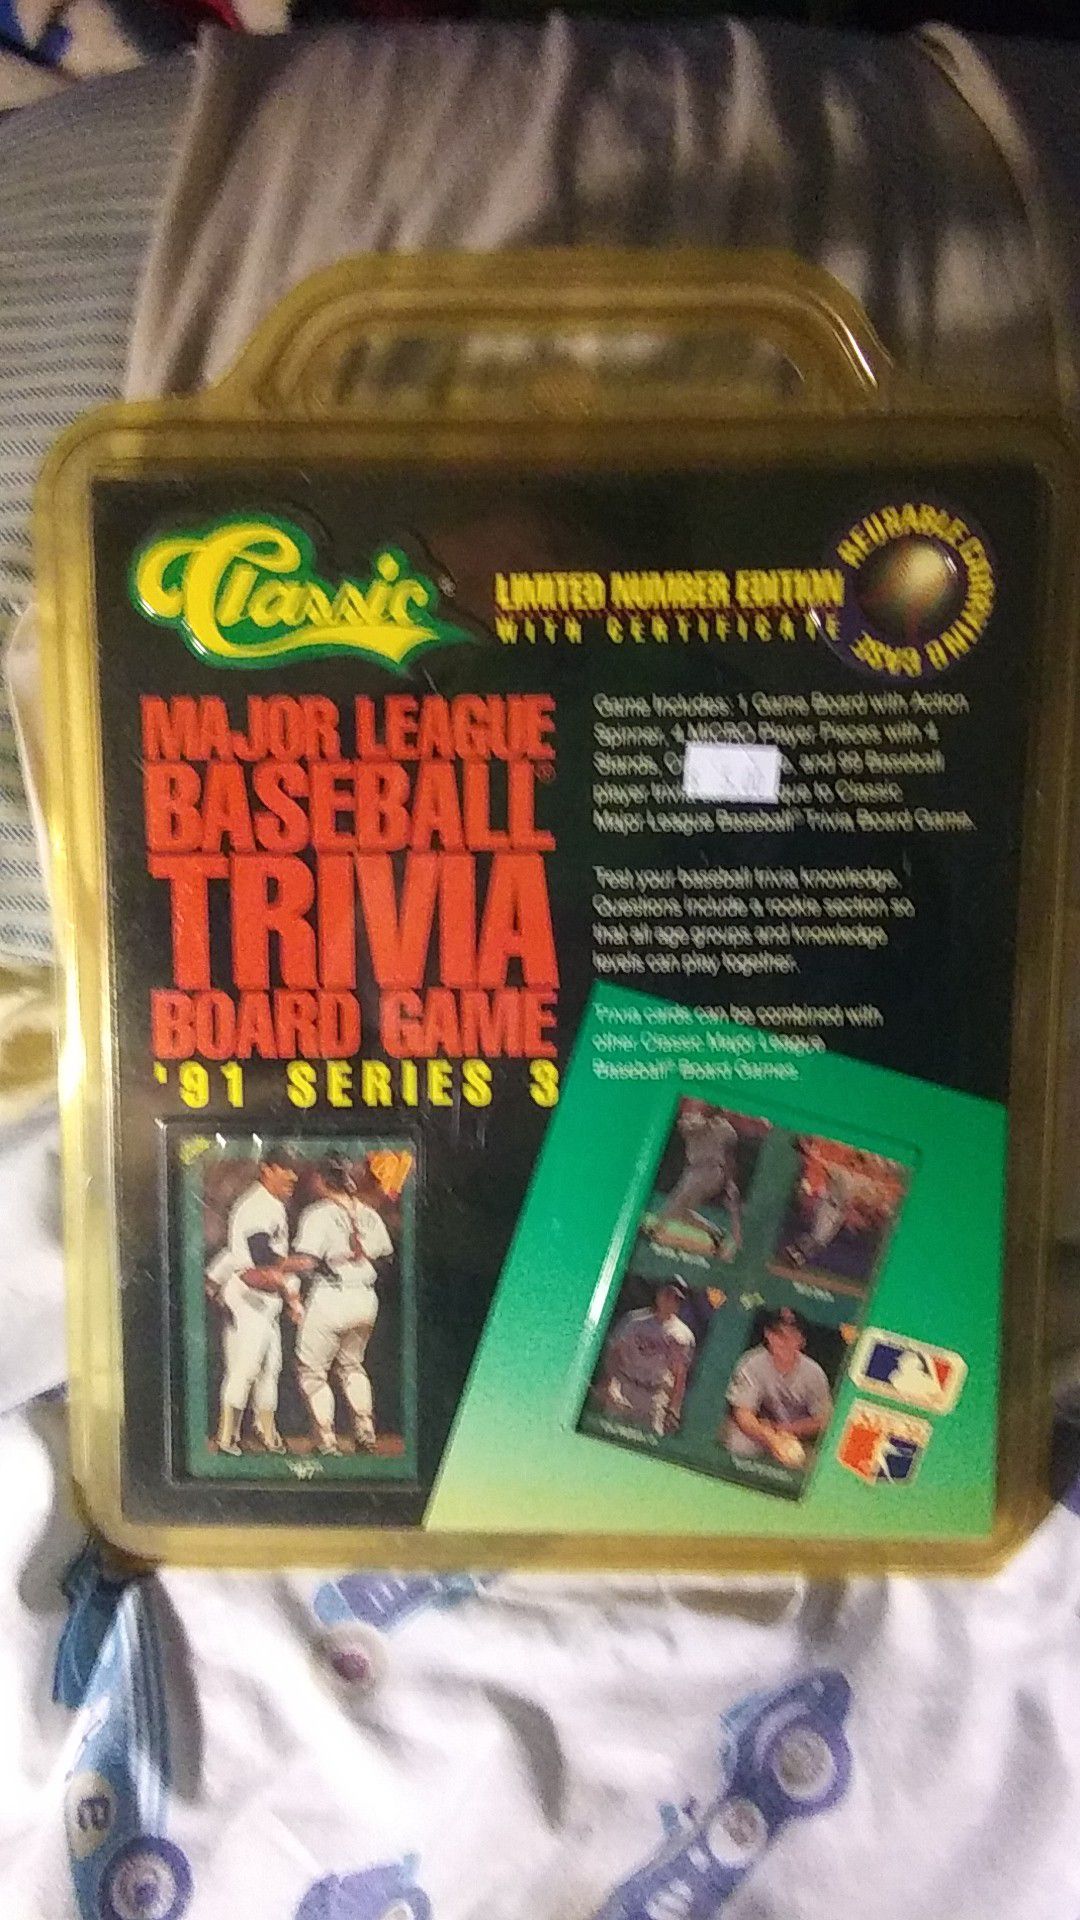 Baseball trivia board game